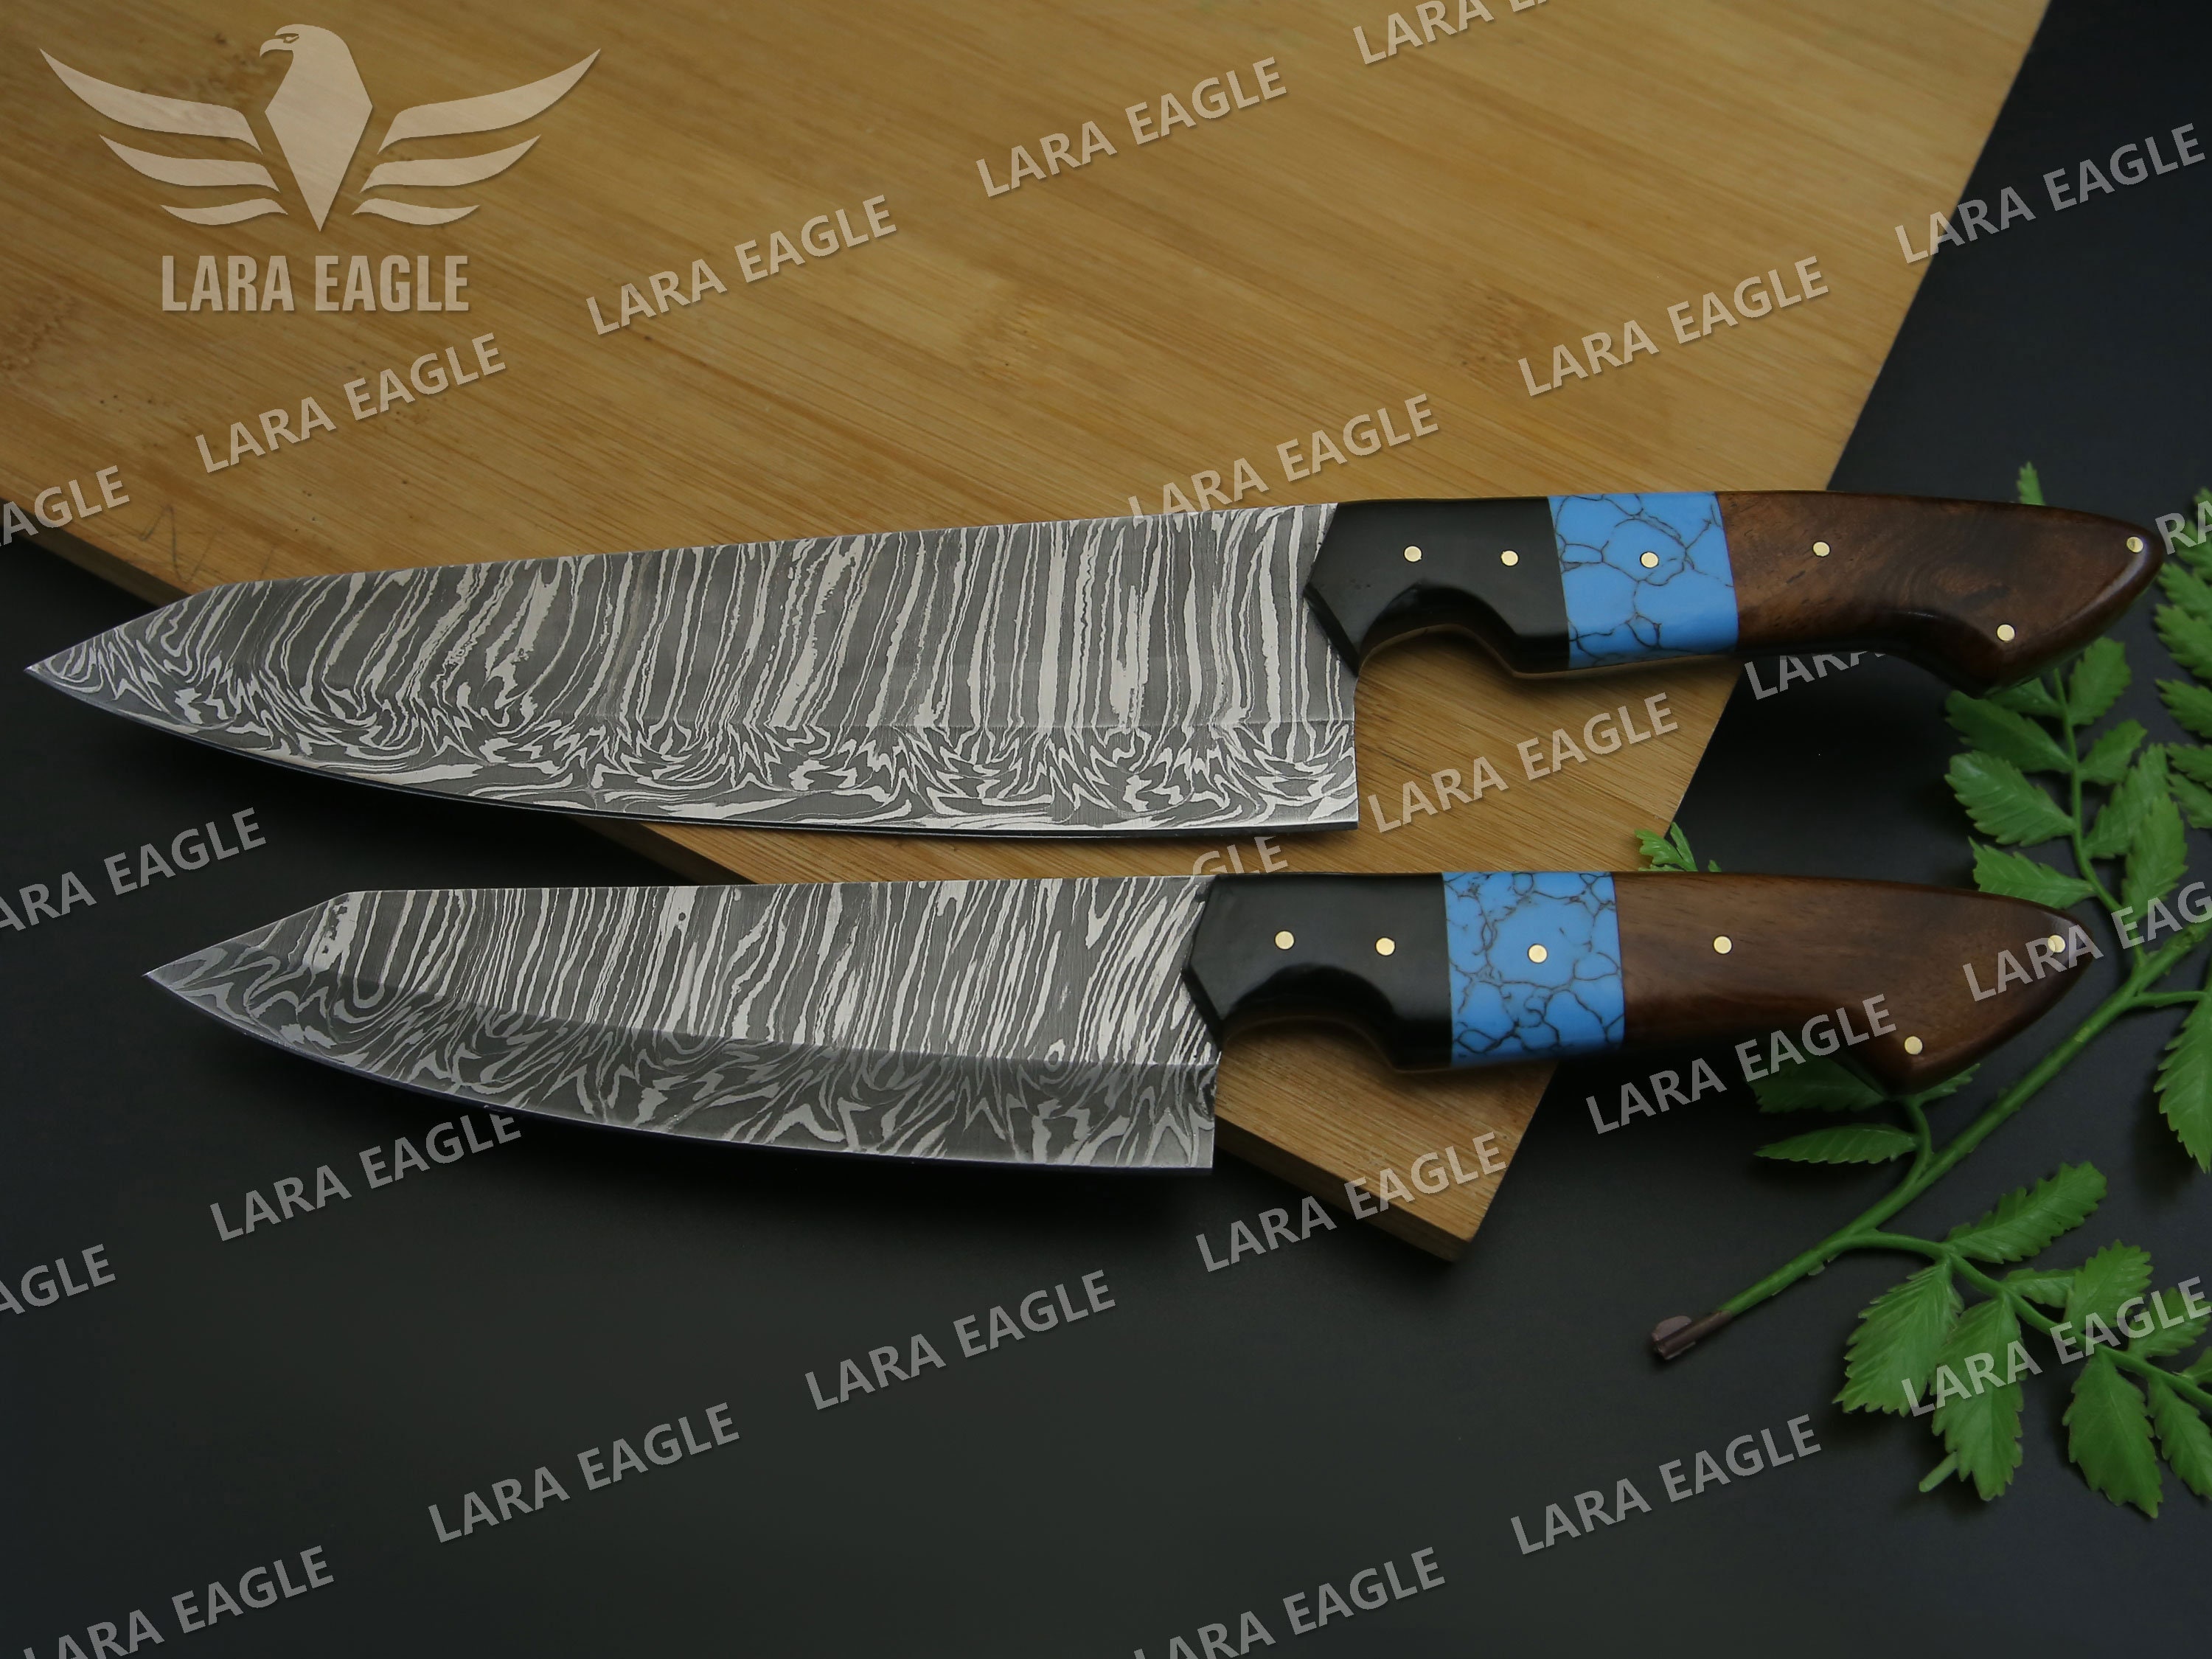 Handmade Damascus Chef Knife Set 6pcs, Turquoise Gemstone, Rose Wood, Pakka  Wood Handle, Gift for Her, Gift for Him 